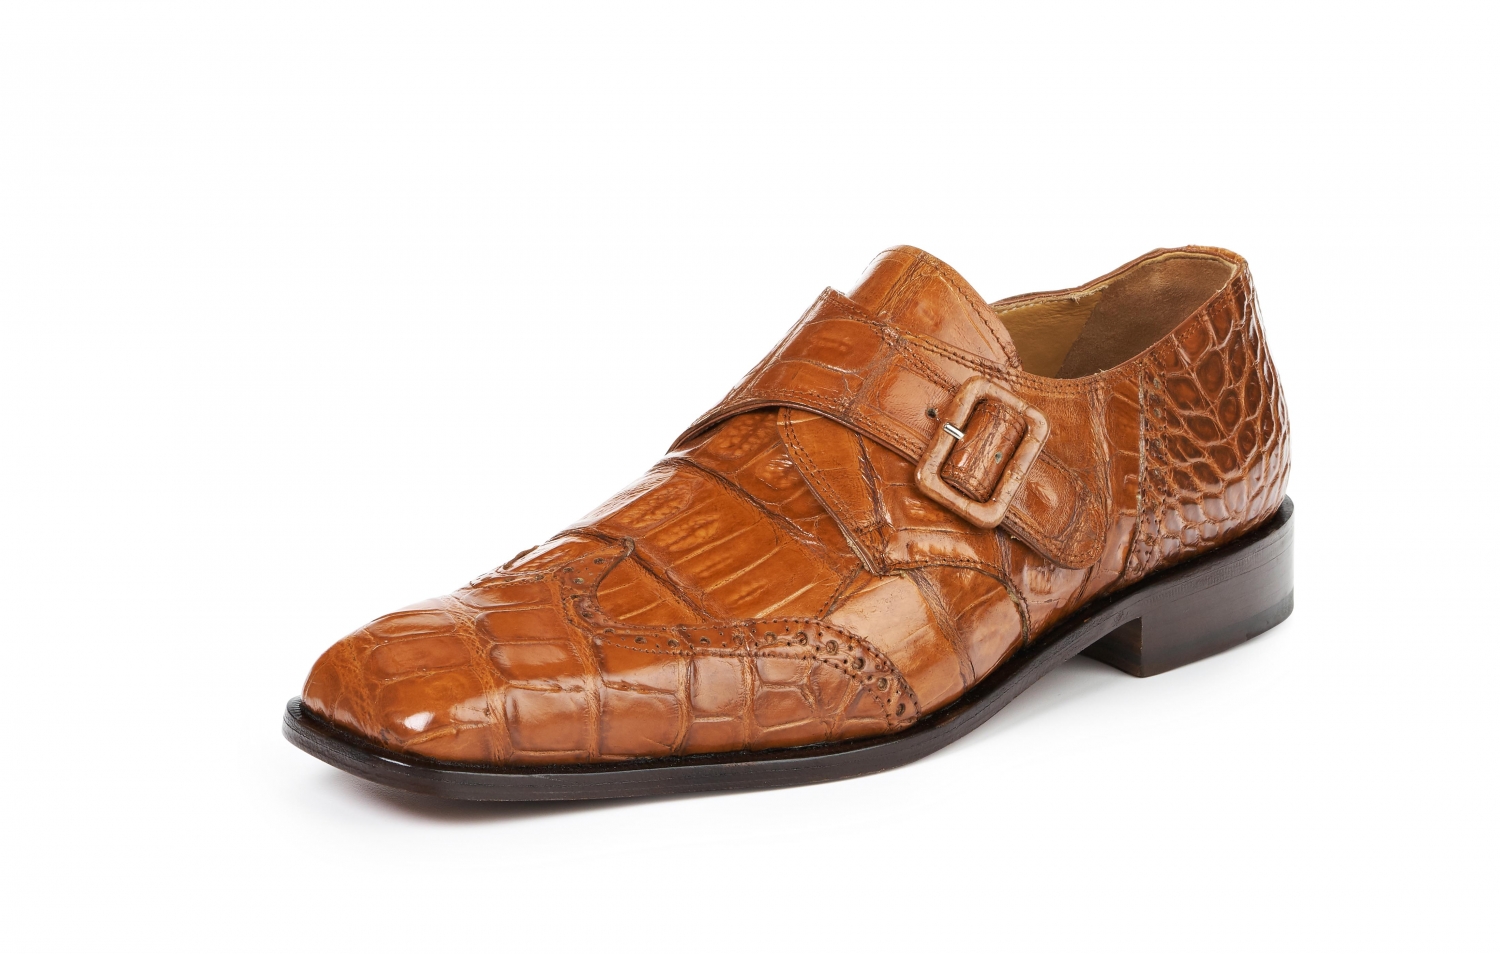 Mauri "Preacher" 4913 Cognac Genuine Body Alligator / Baby Crocodile Monk Strap Loafer Shoes.